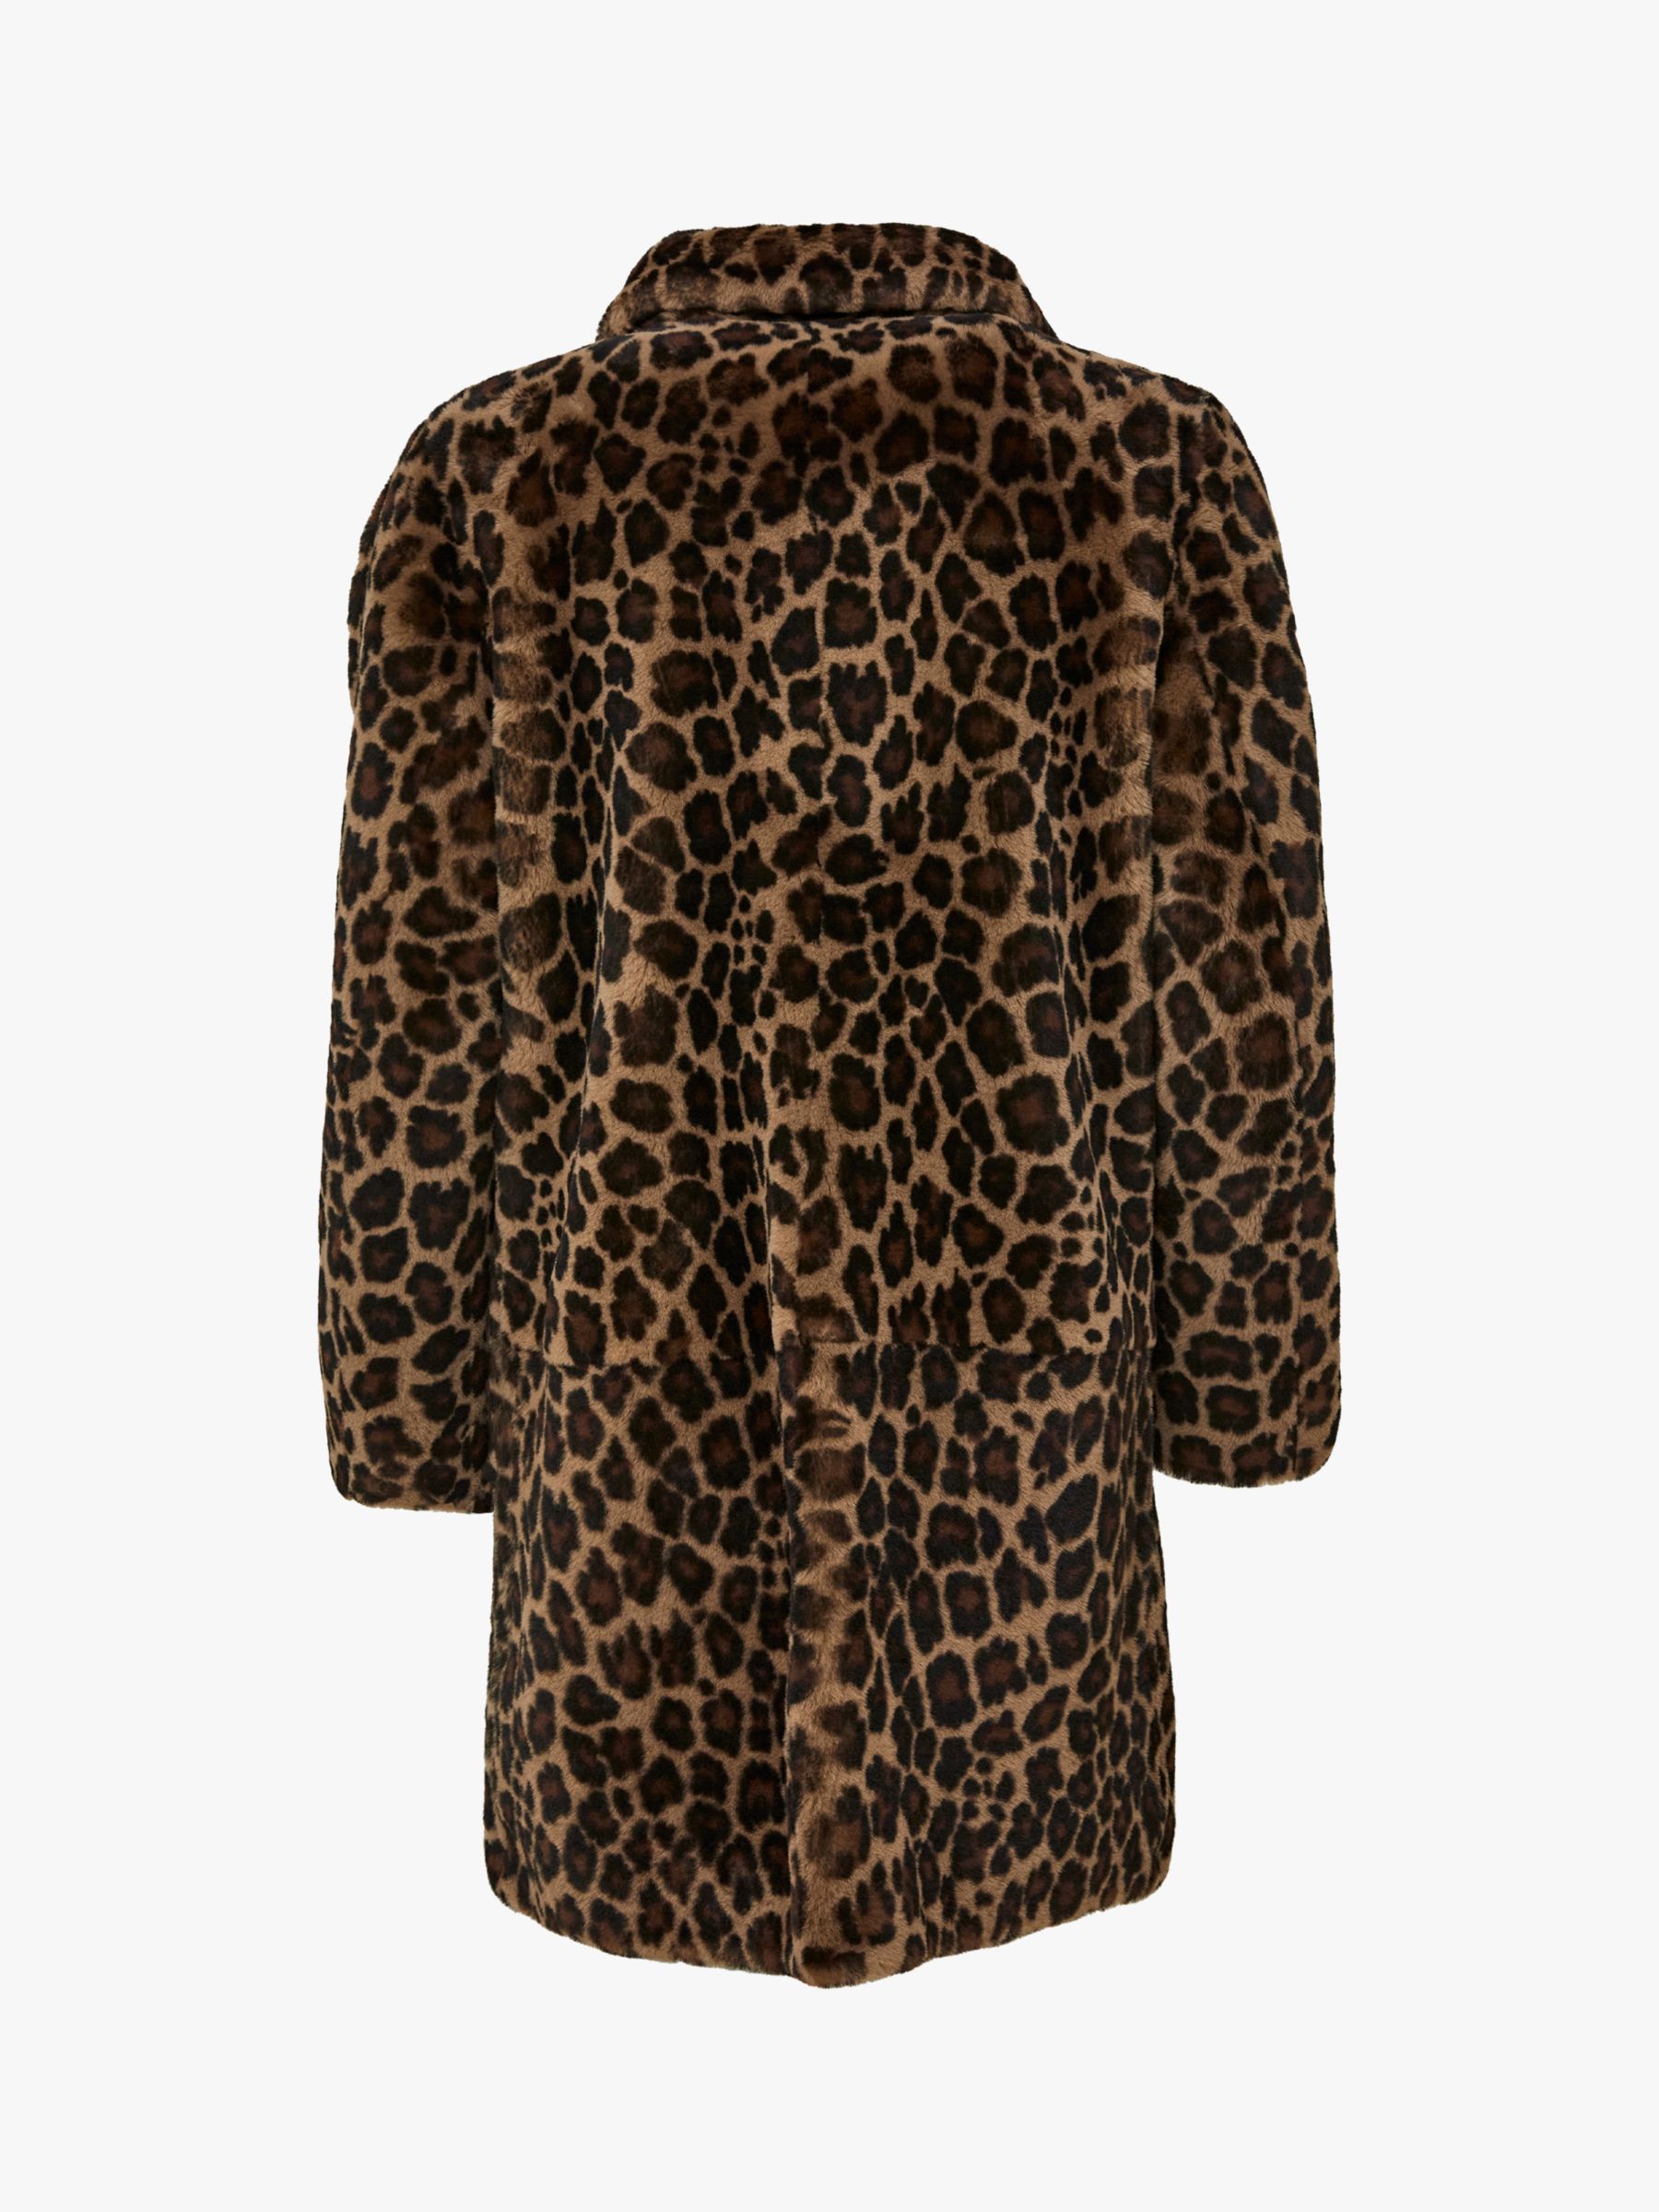 Celtic & Co. Leopard Print Sheepskin Coat, Brown, 8